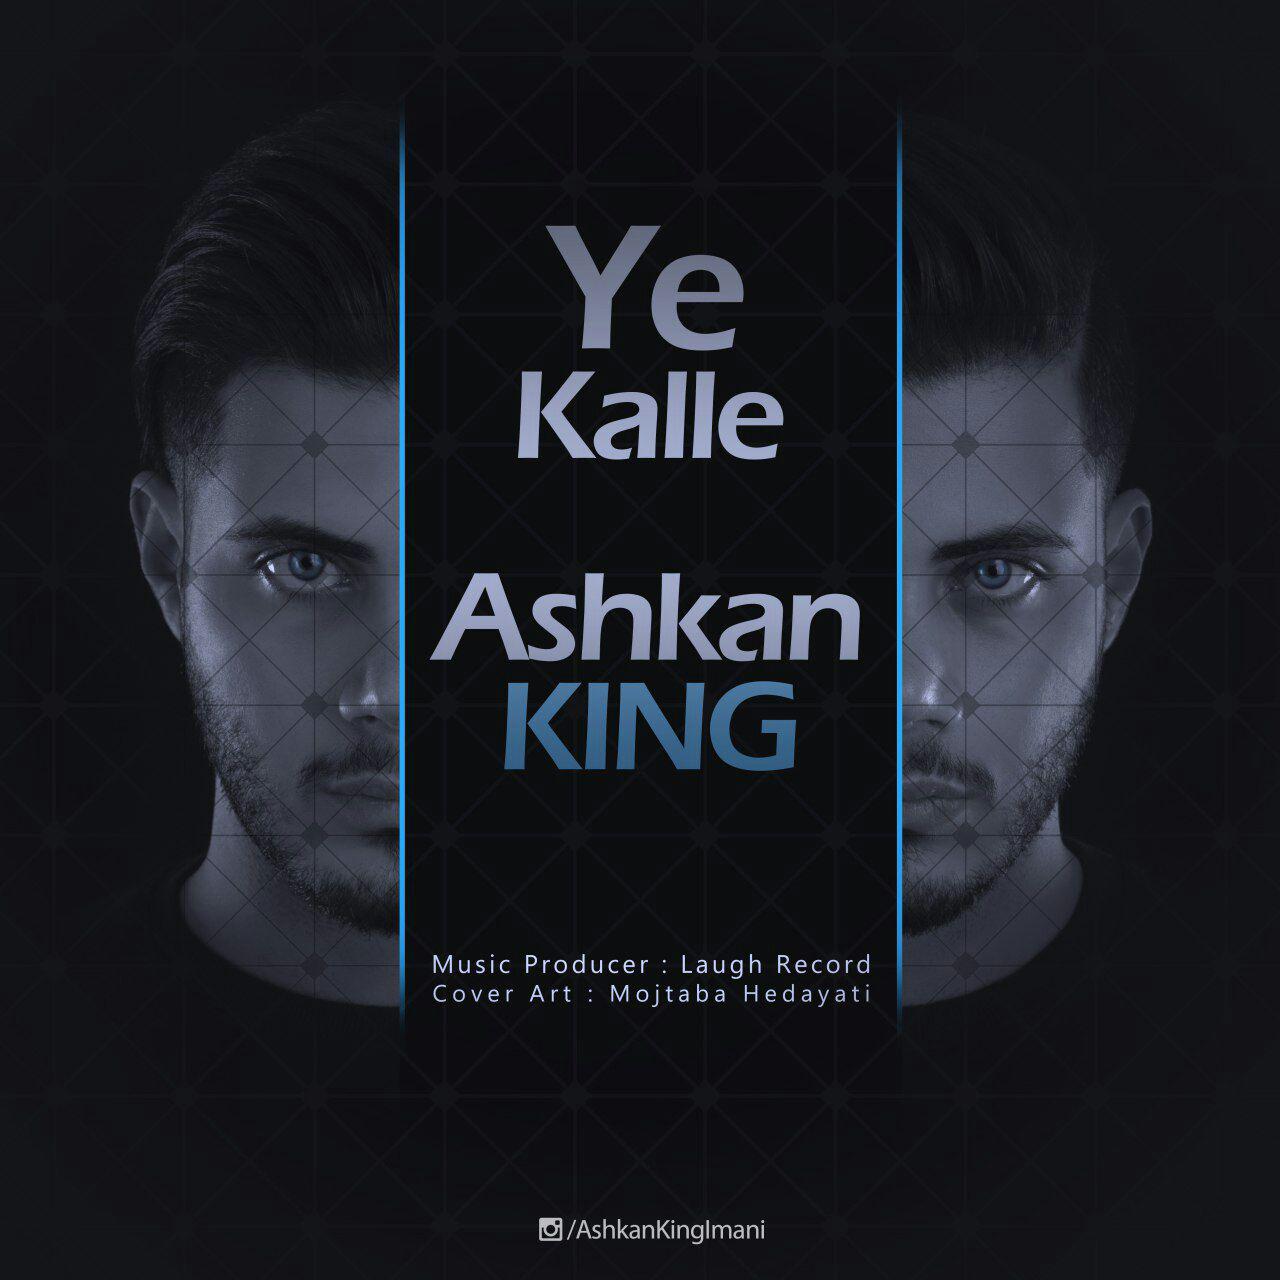  دانلود آهنگ جدید اشکان کینگ - یه کله | Download New Music By Ashkan King - Ye Kalle